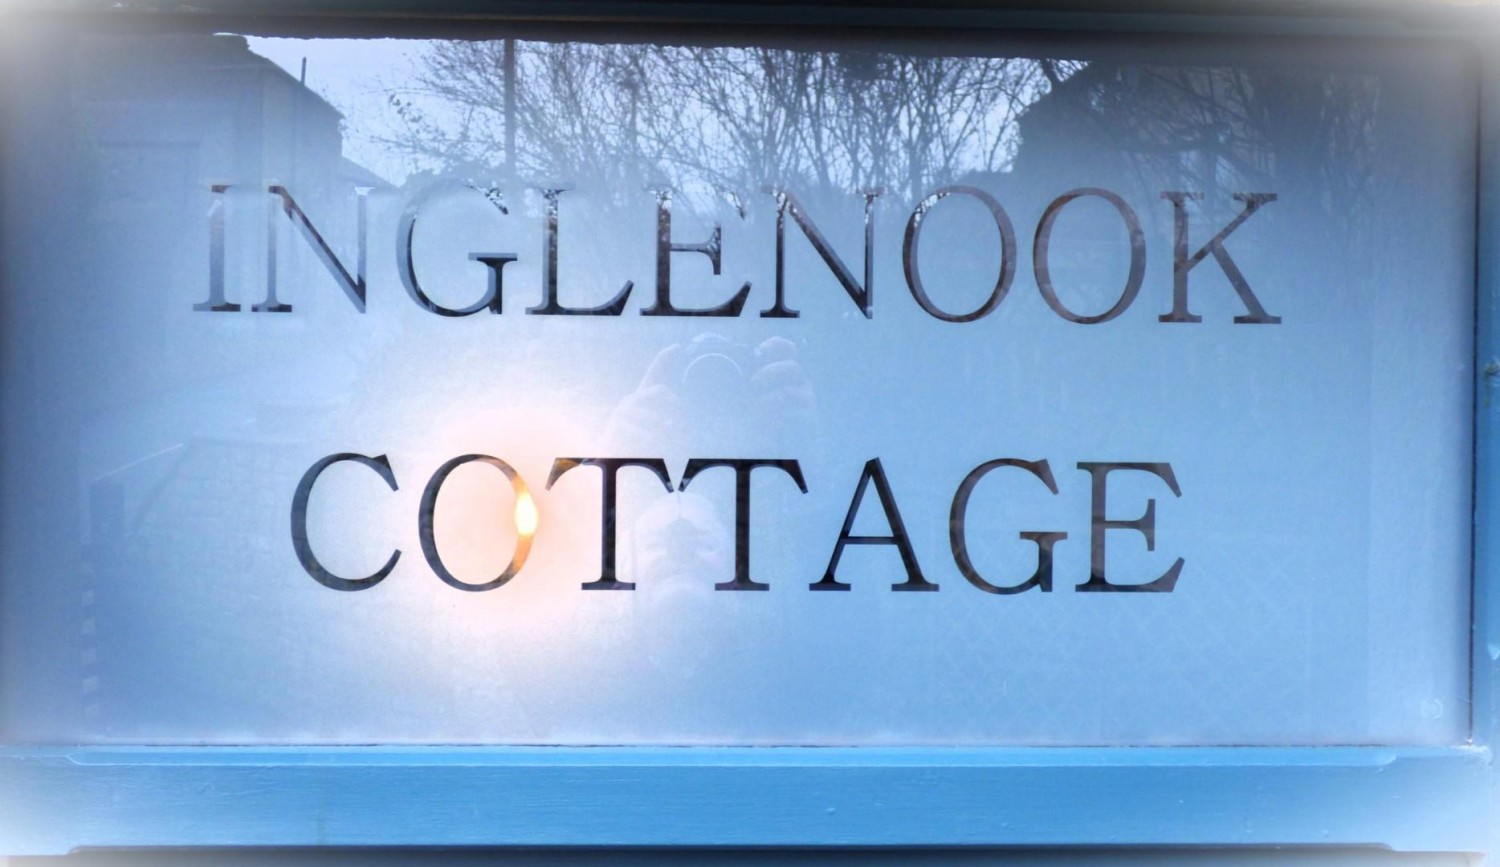 Inglenook Cottage, East Lane, Embsay, Skipton